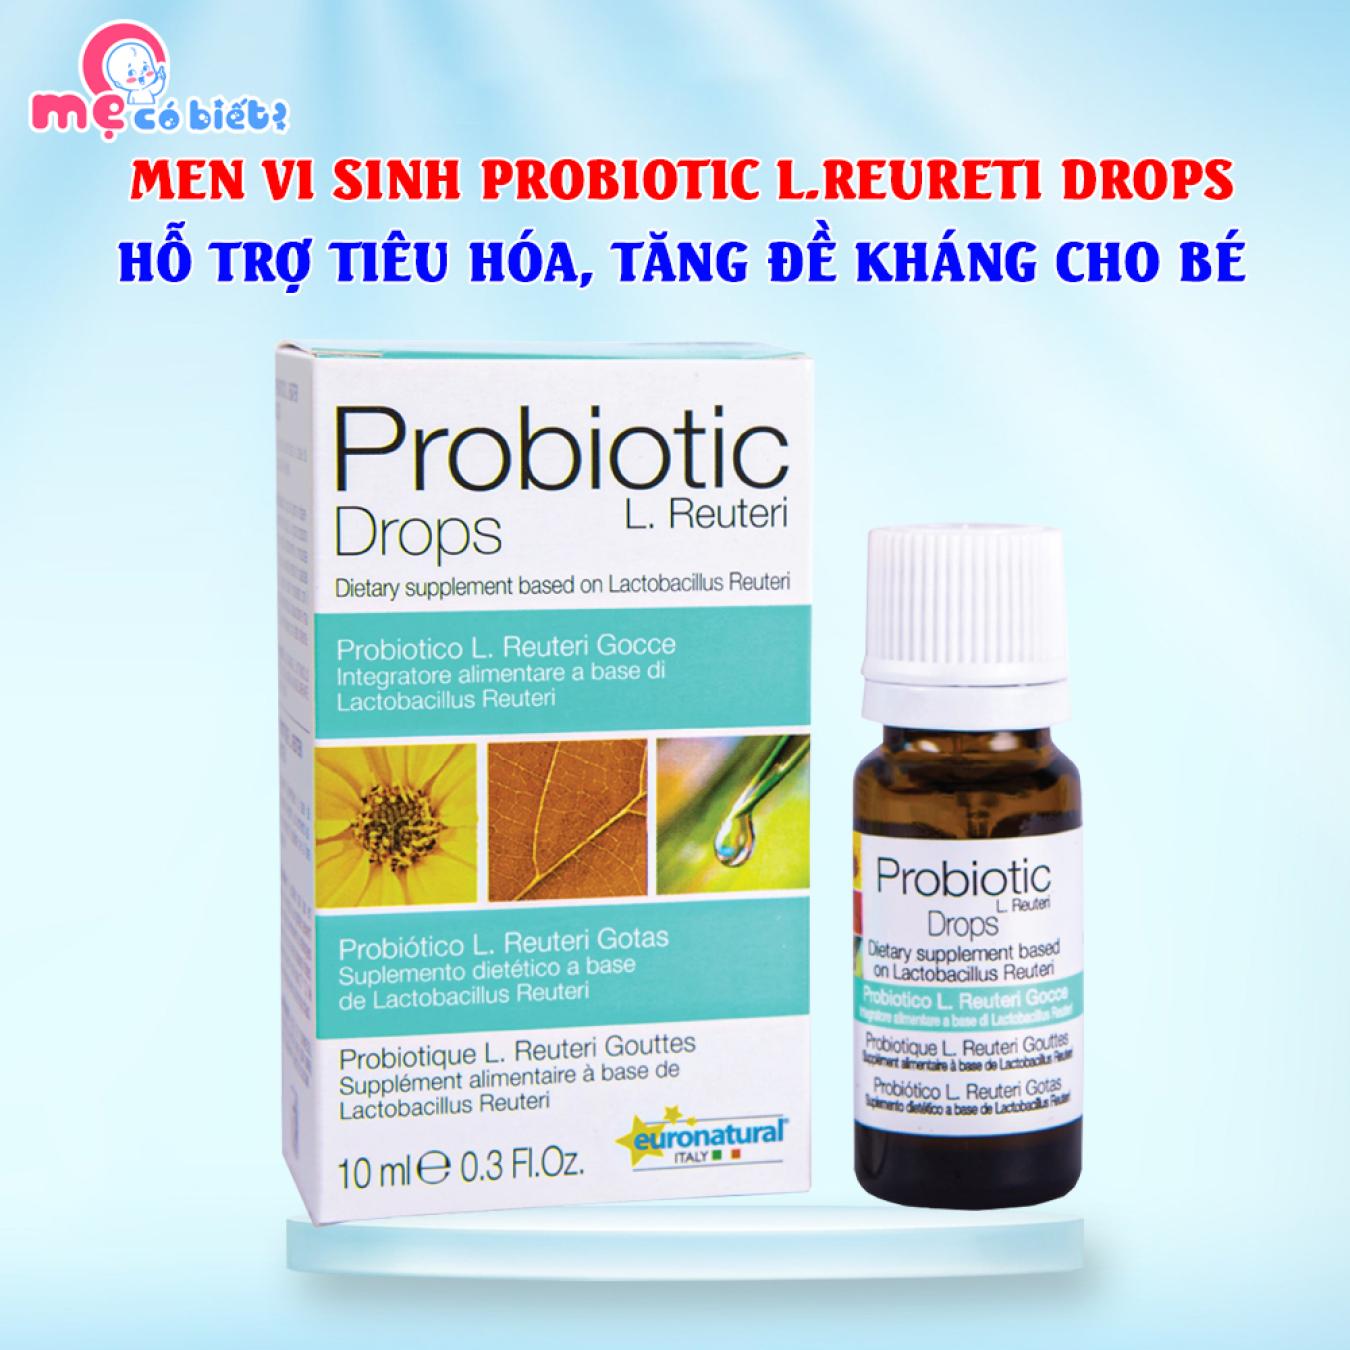 Men vi sinh Probiotic L.Reureti Drops - Giúp hệ tiêu hóa của bé khỏe mạnh